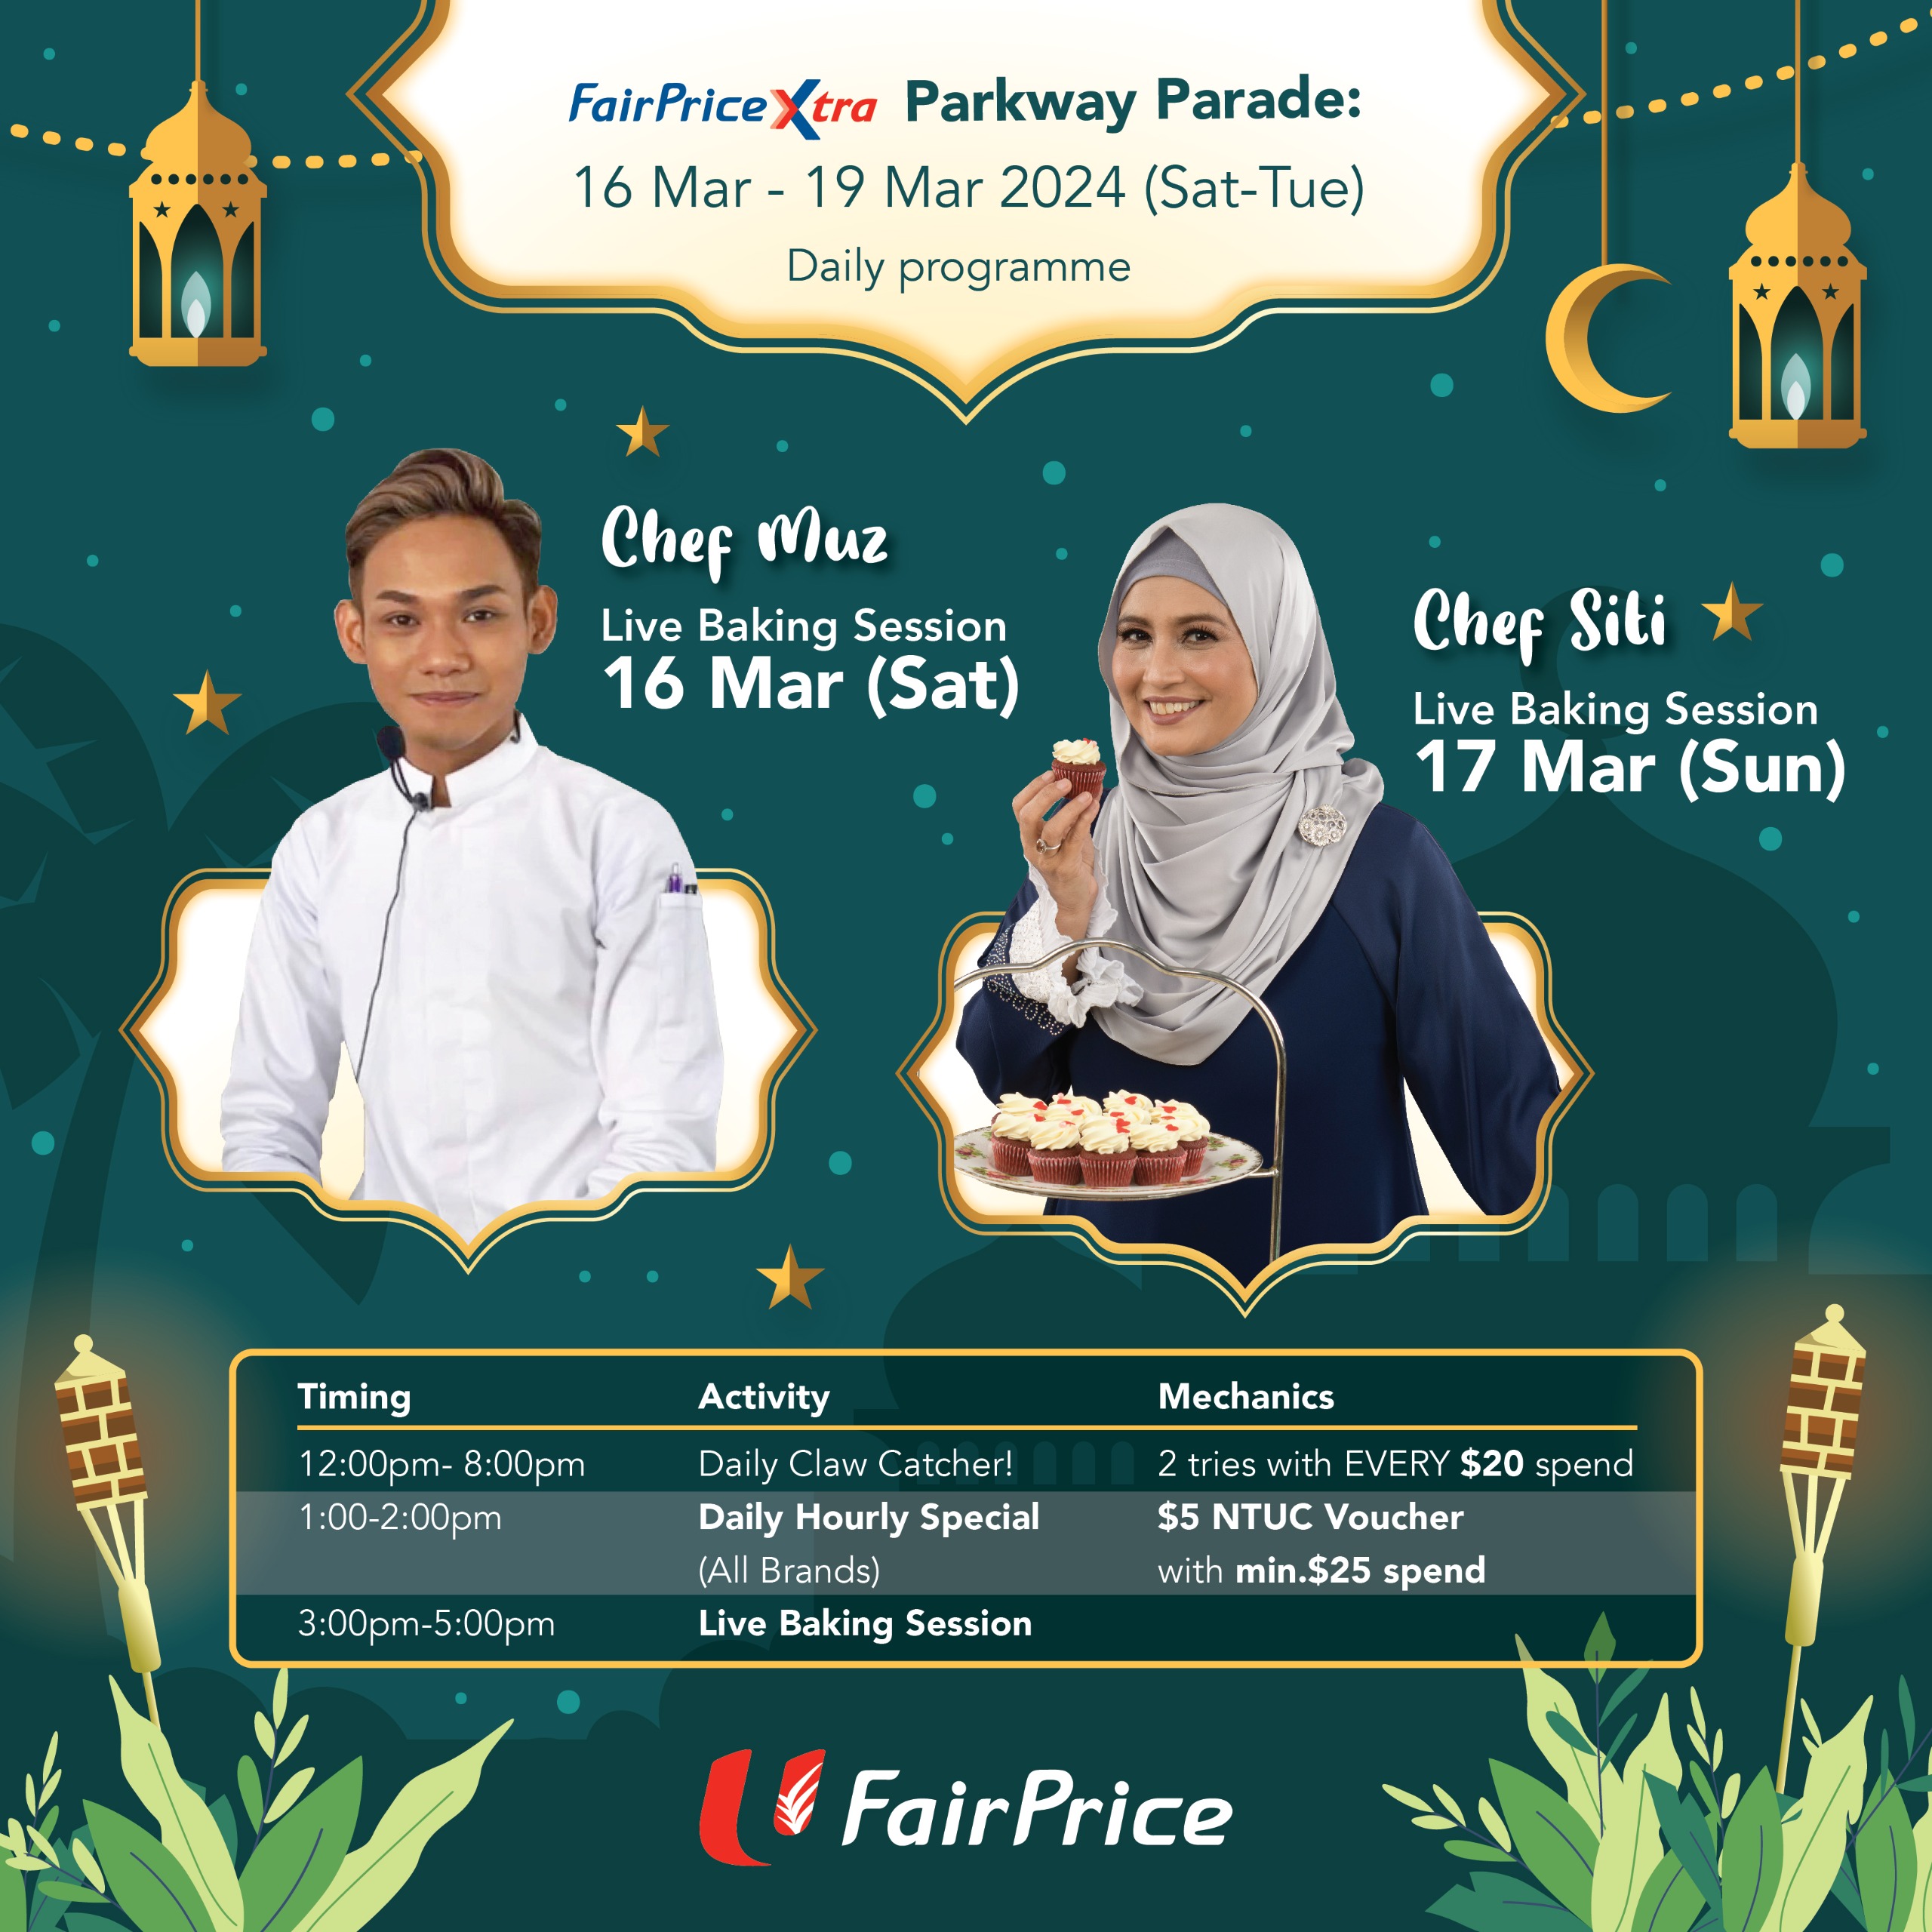 FairPrice Xtra Parkway Parade Baking Fair 2024 Chef Siti Chef Muz